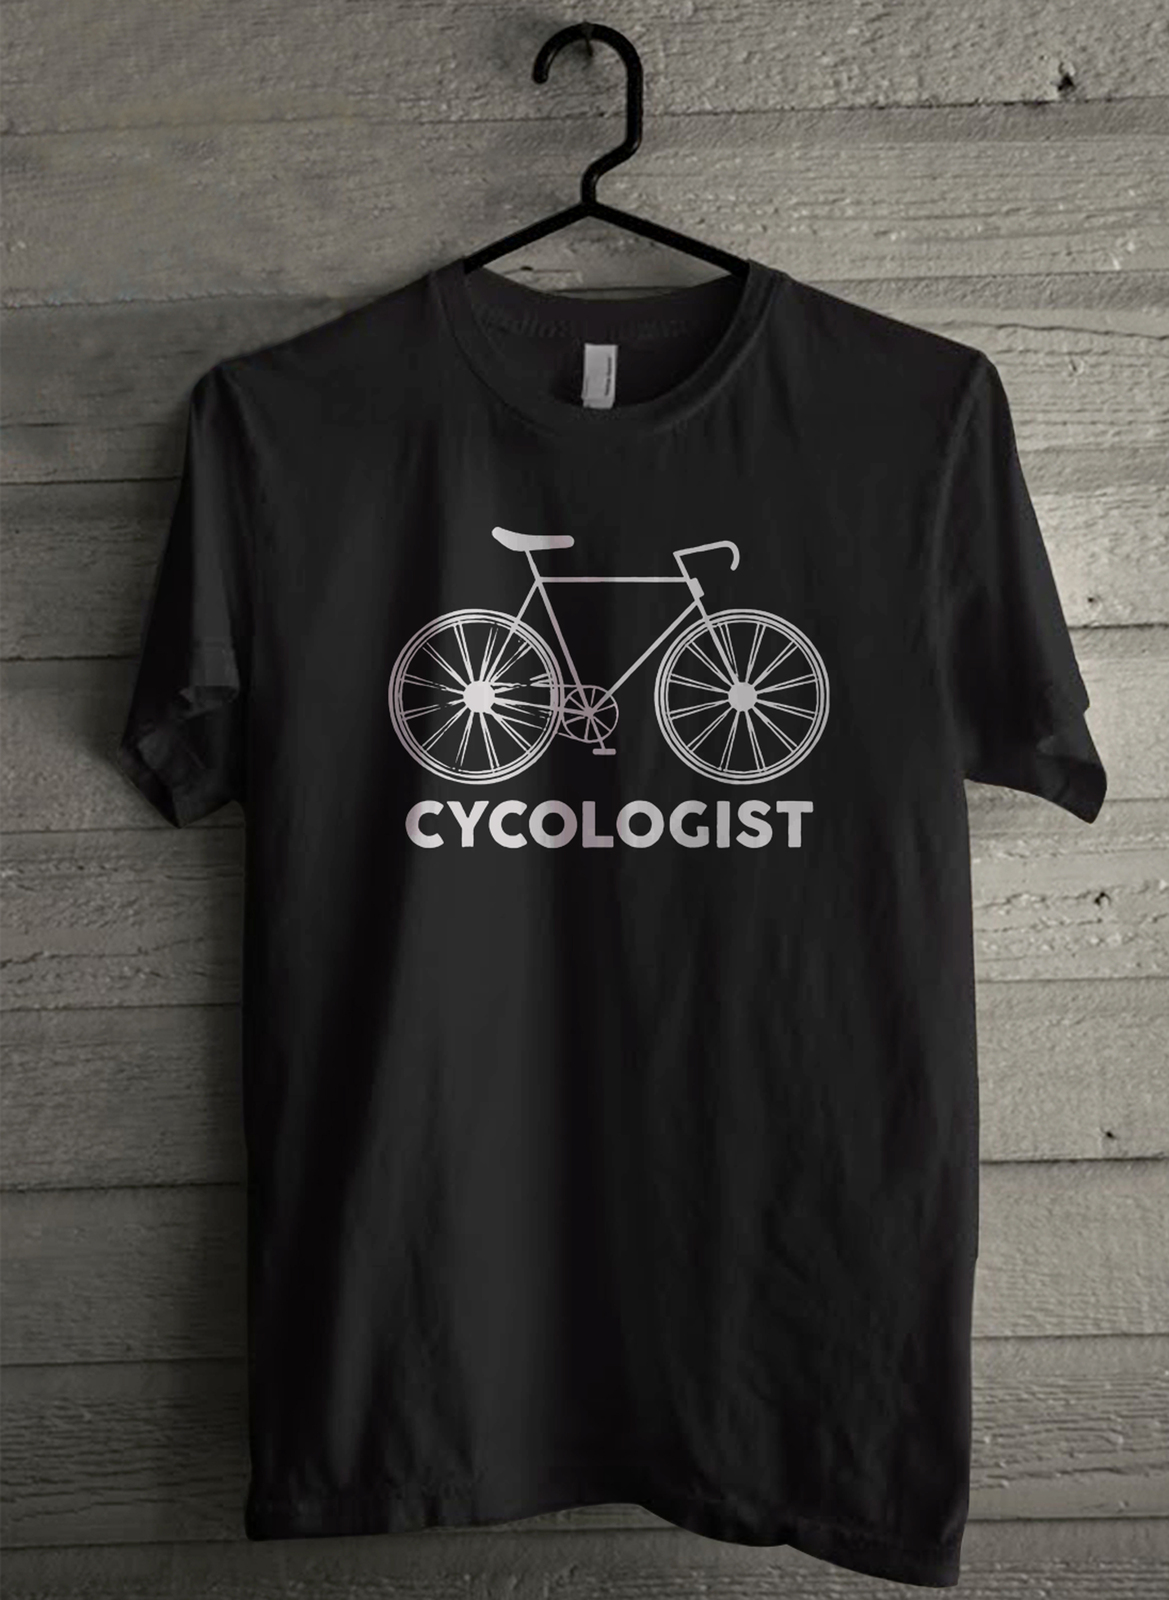 Cycologist - Custom Men's T-Shirt (4477) - $19.13 - $21.84